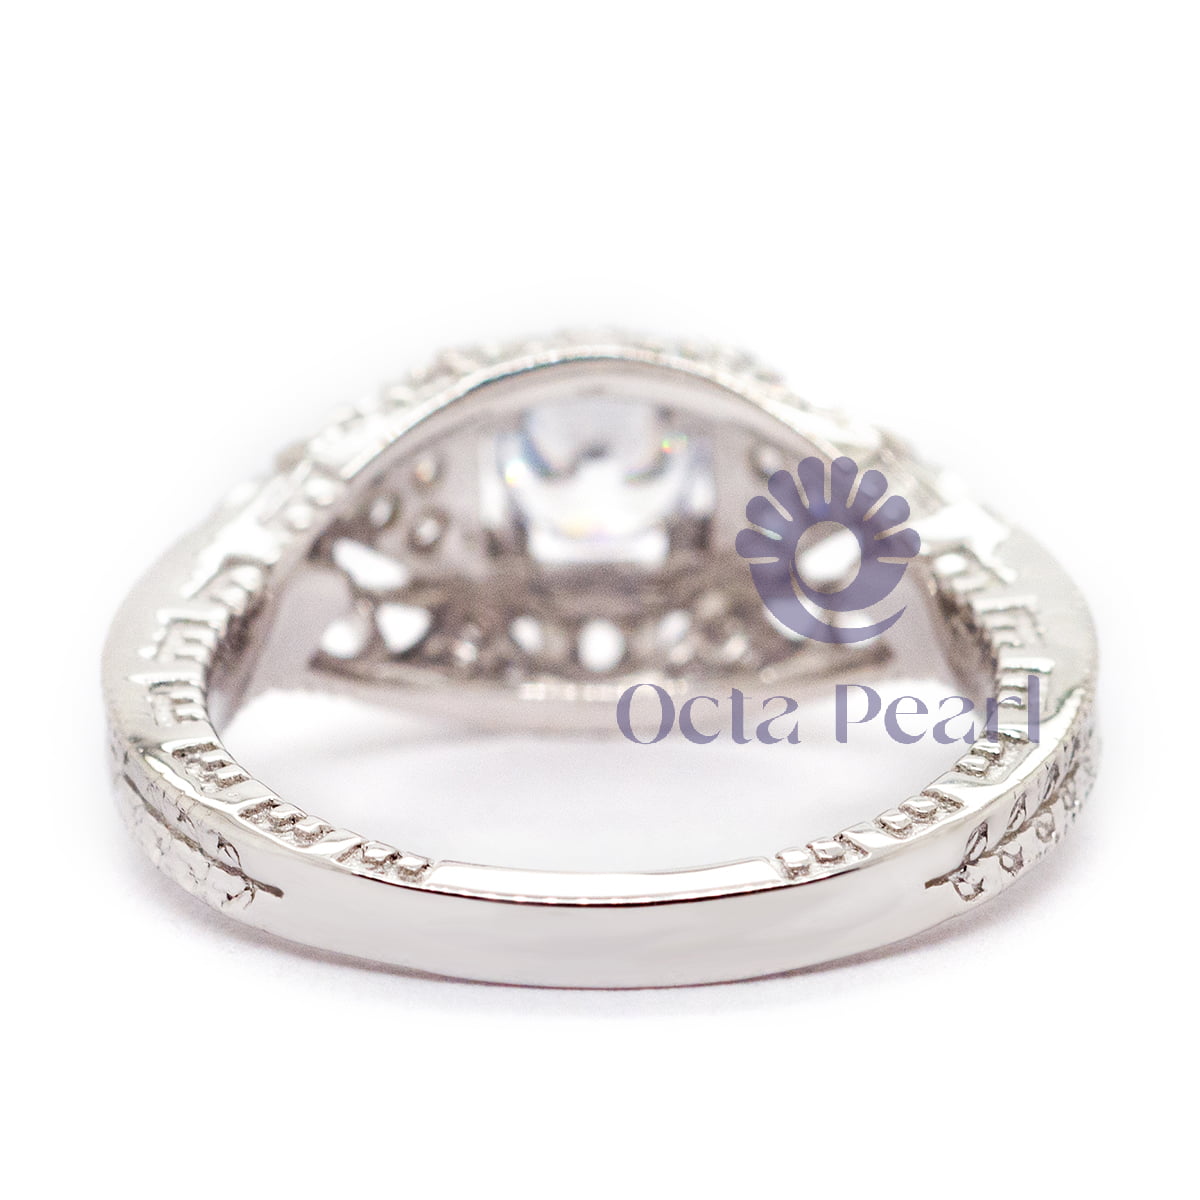 Round Cut Moissanite Art Deco Vintage Engagement Wedding Ring (5/7 TCW)